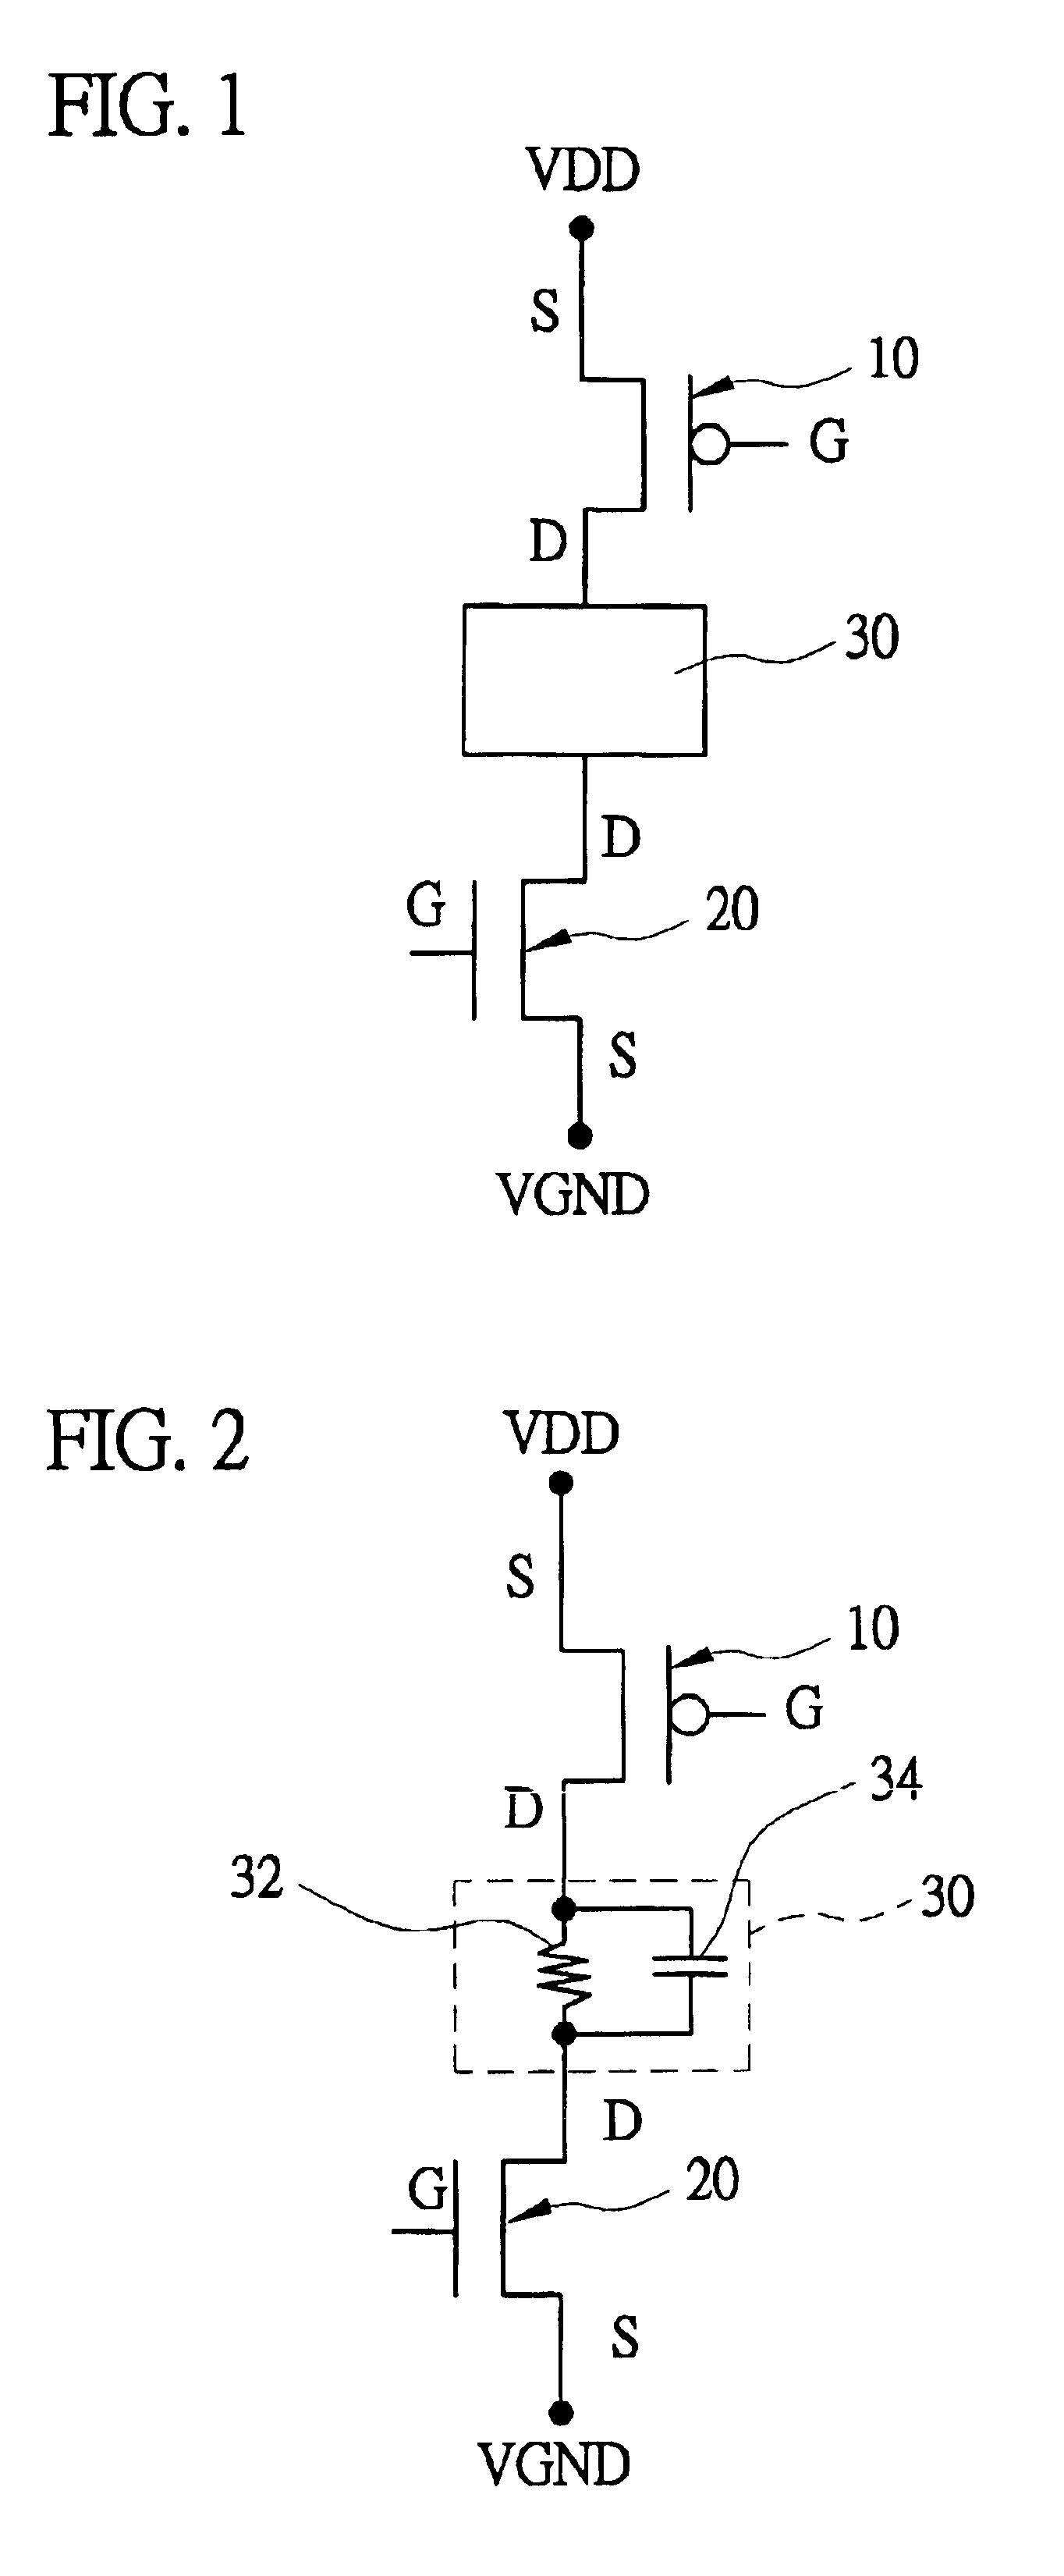 Circuit apparatus operable under high voltage